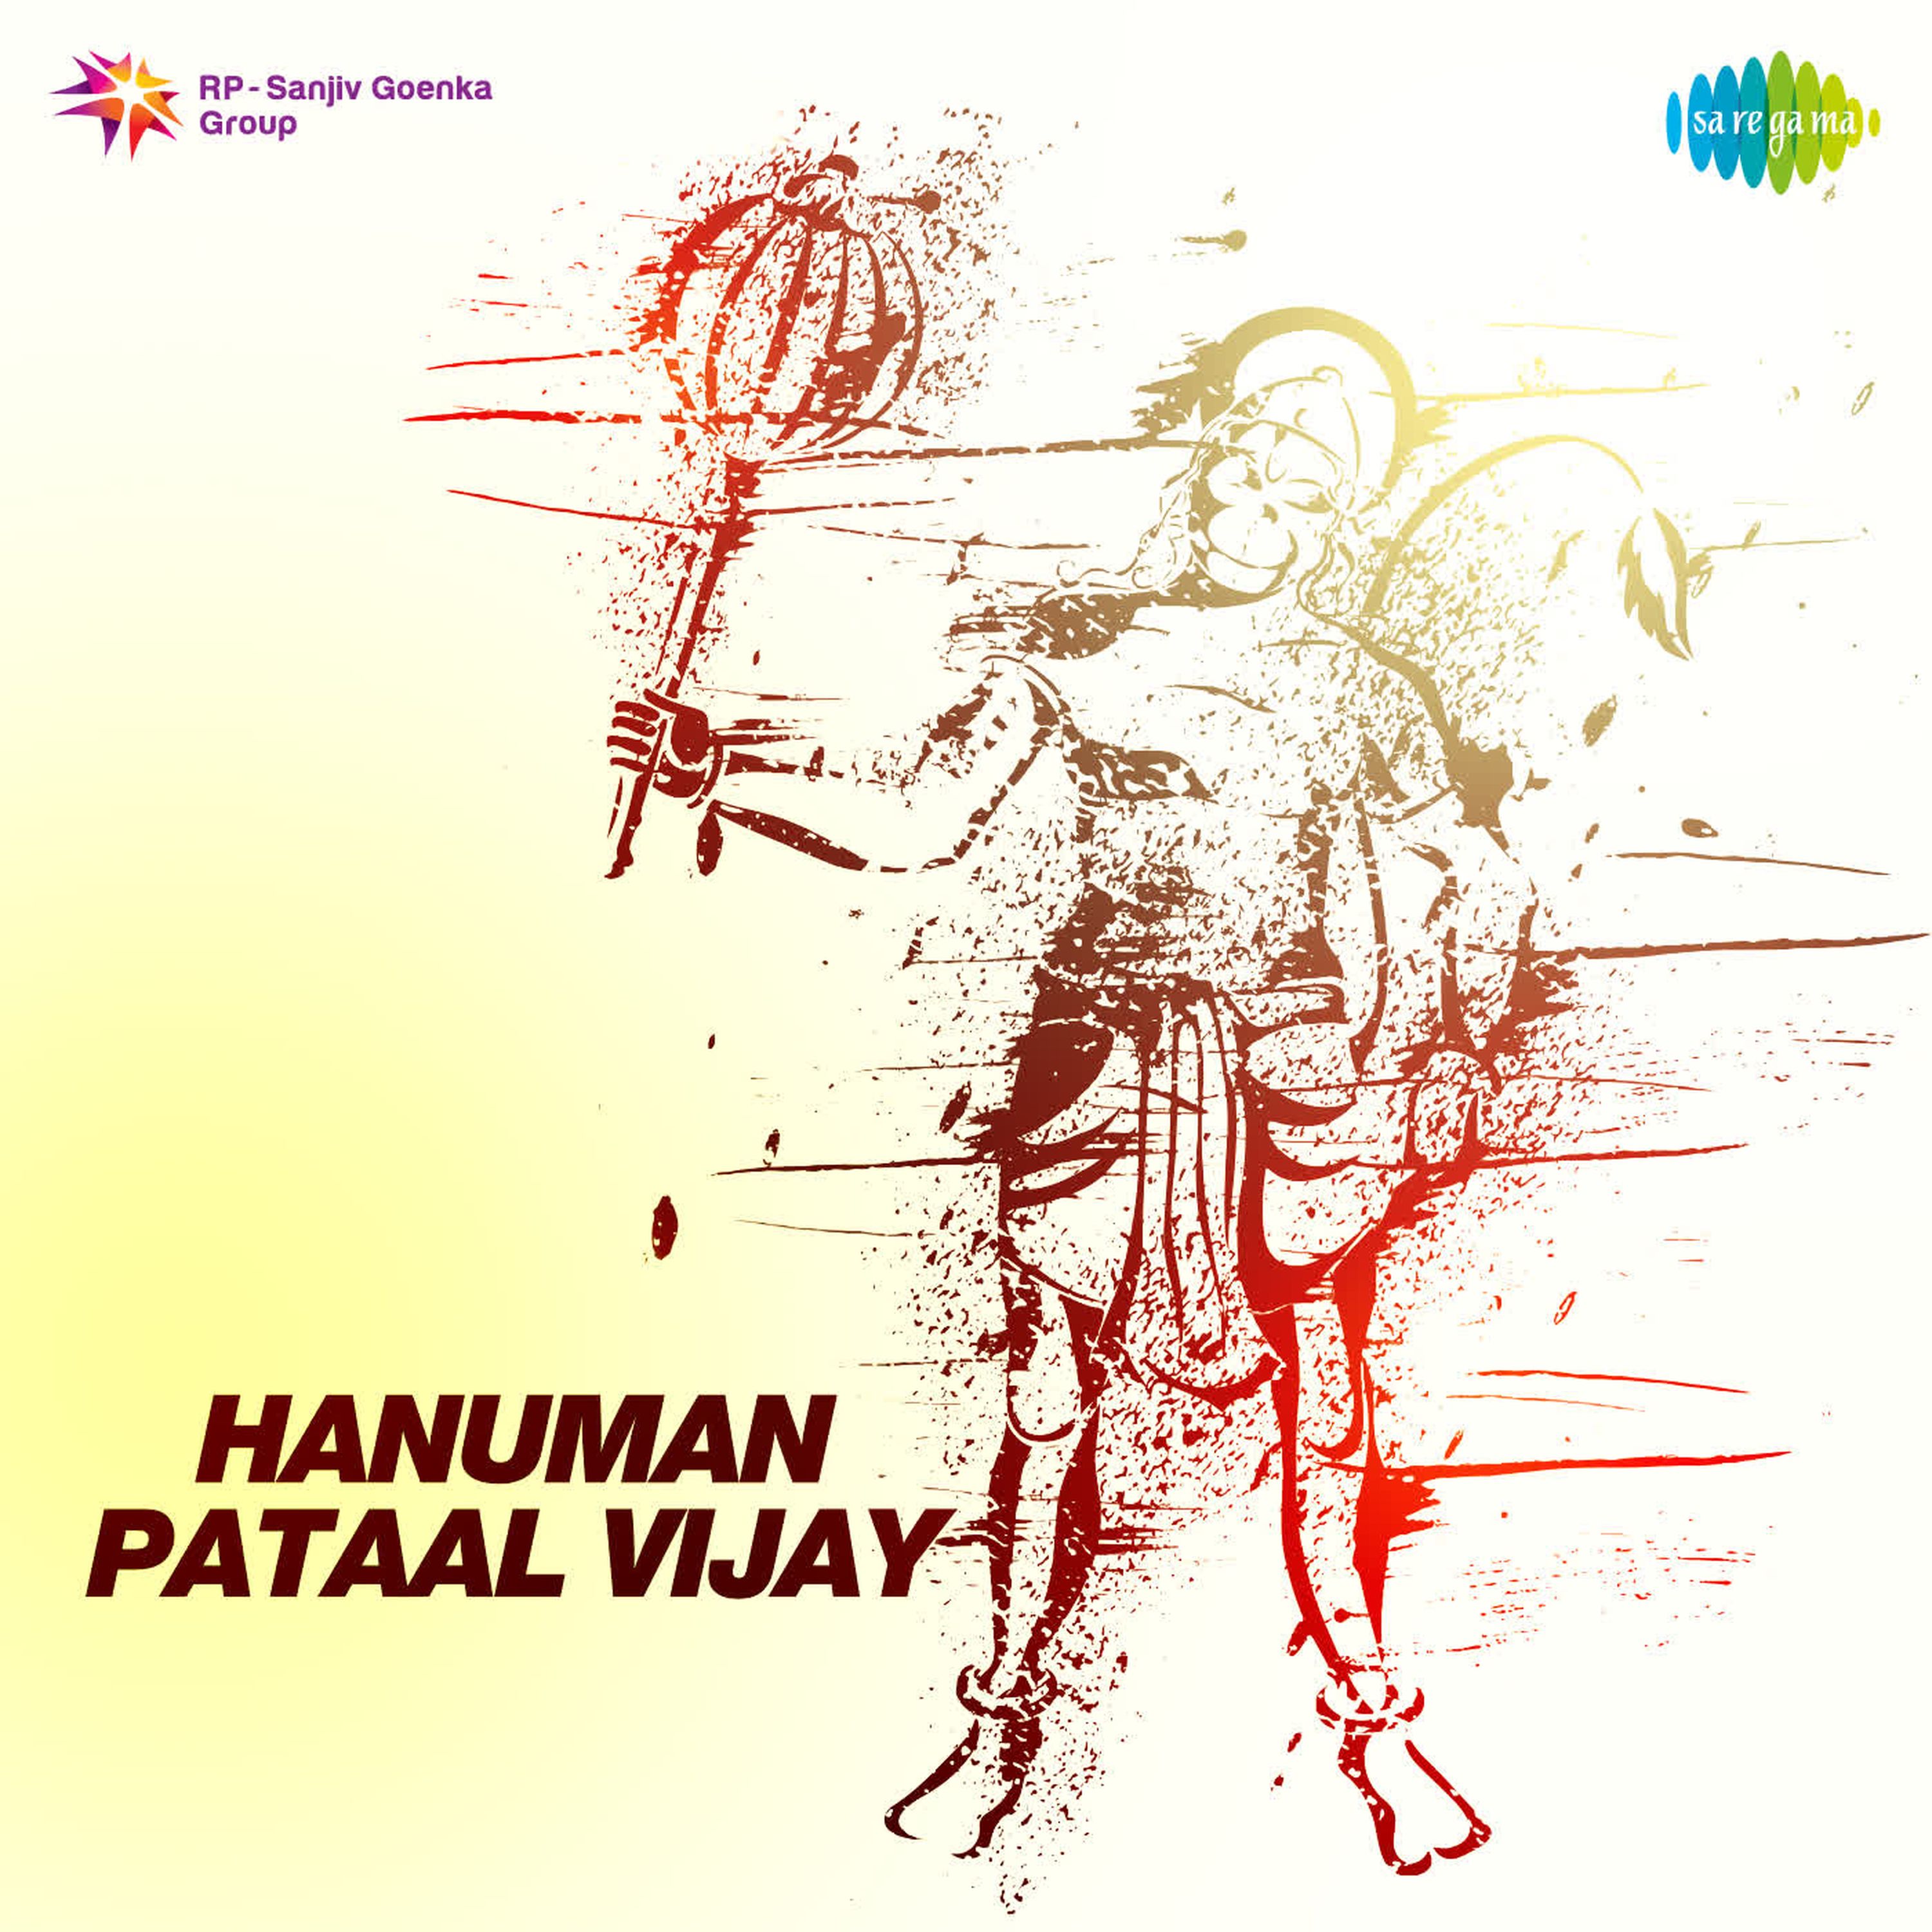 Hanuman Pataal Vijay